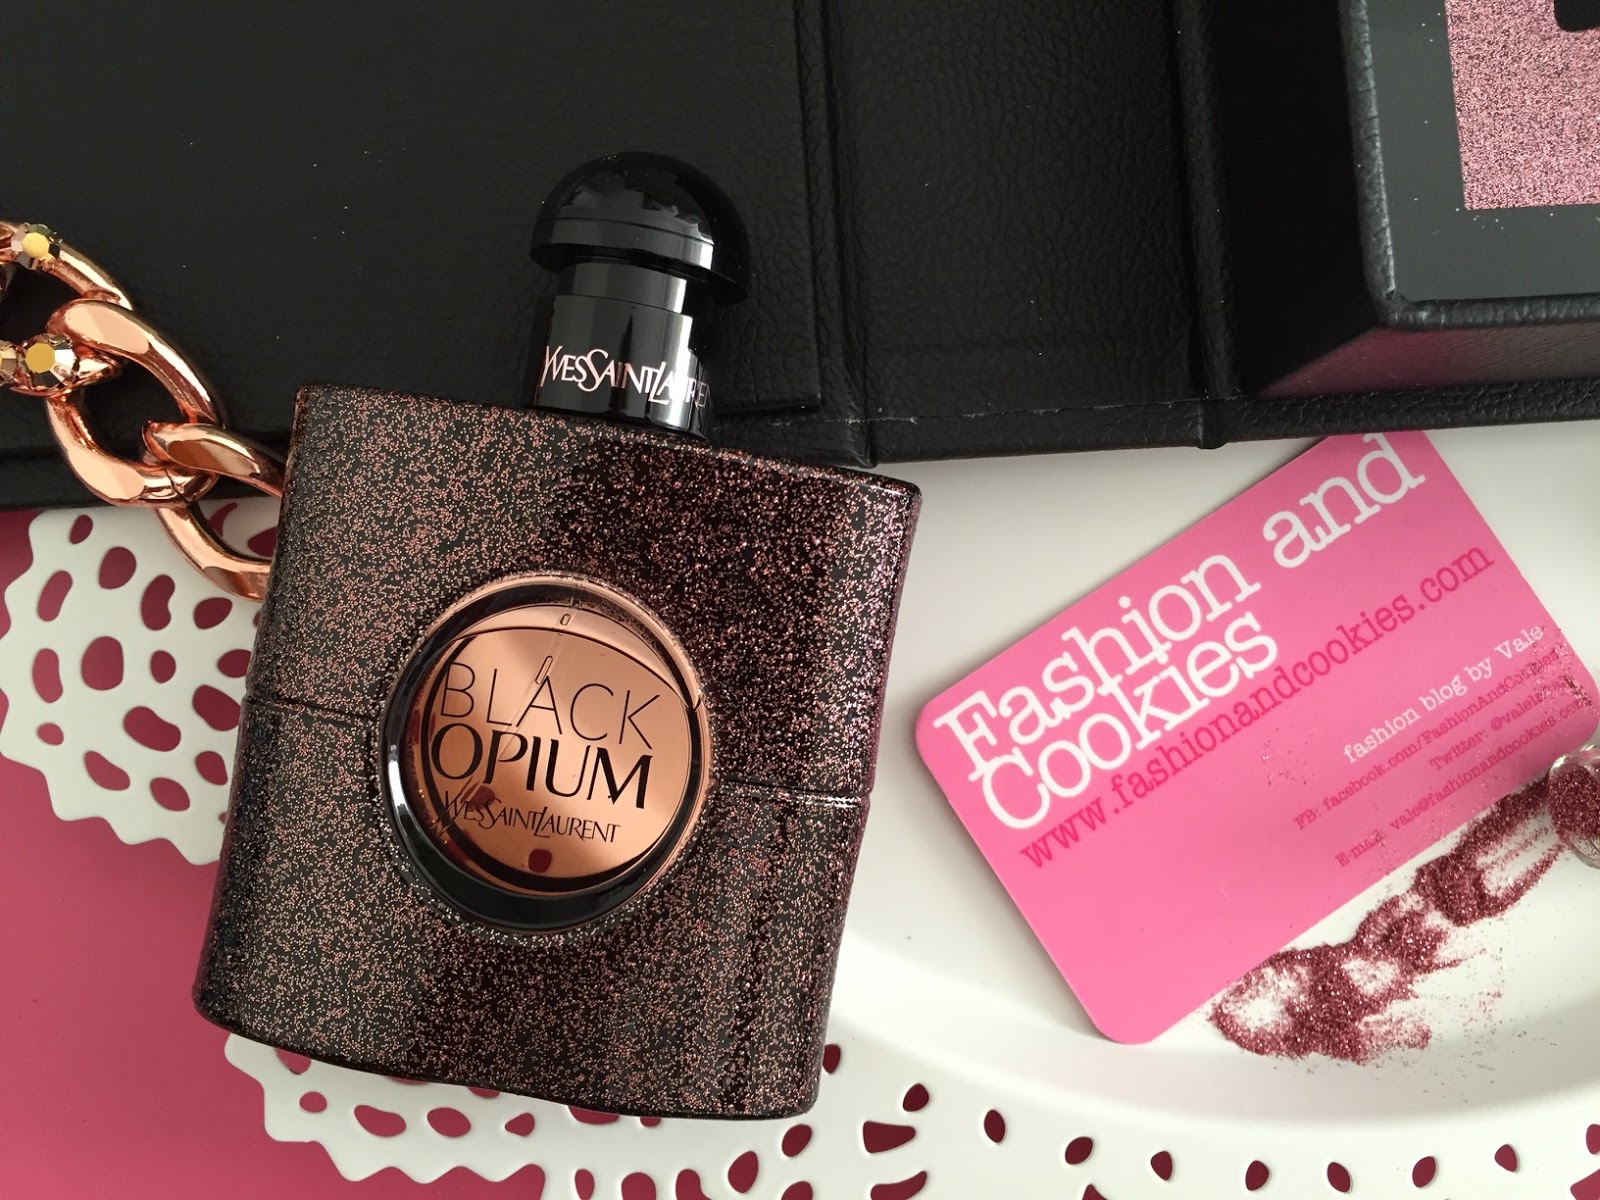 YSL Black Opium Eau de Toilette on Fashion and Cookies fashion and beauty blog